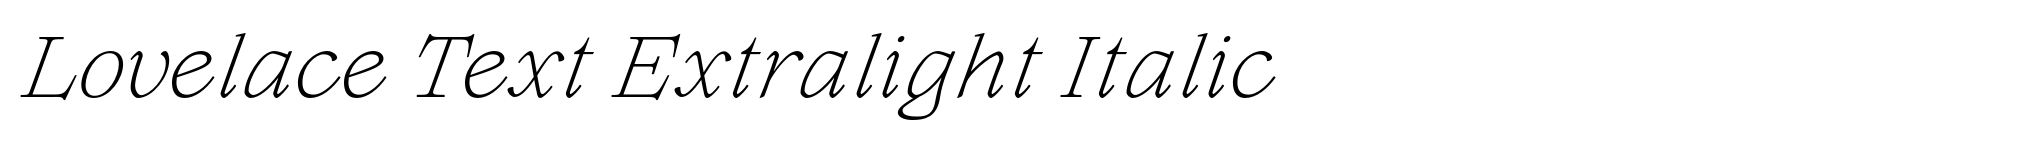 Lovelace Text Extralight Italic image